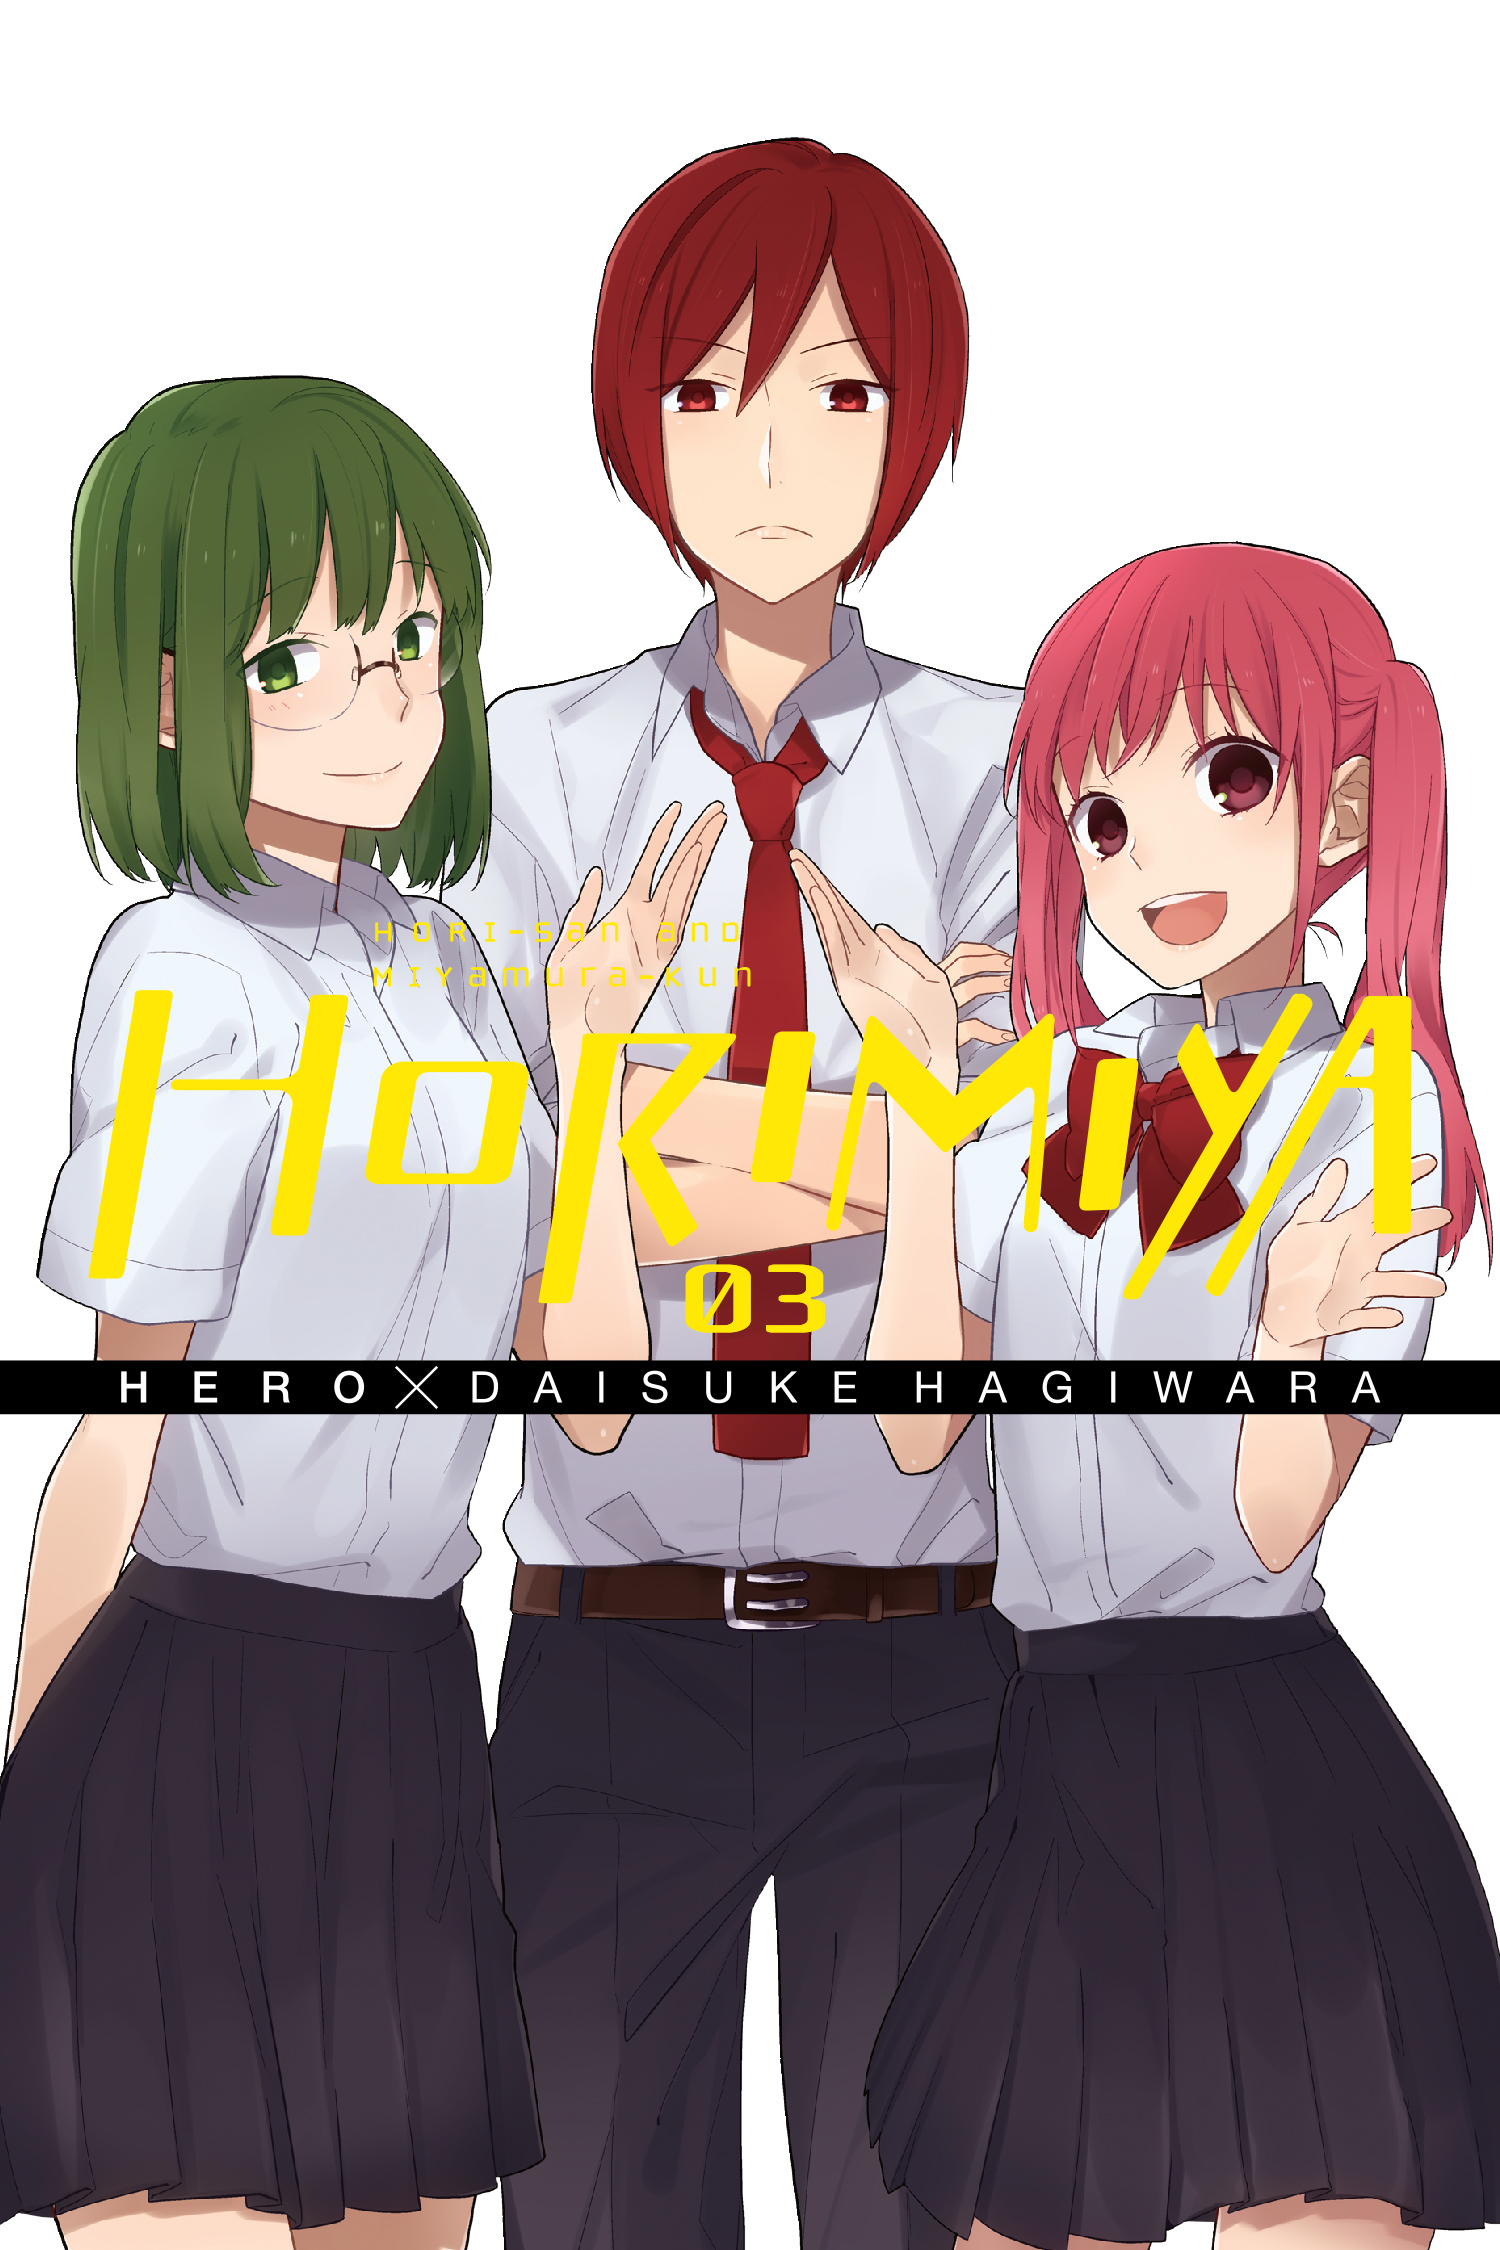 Why should you watch HoriMiya?, Anime Review